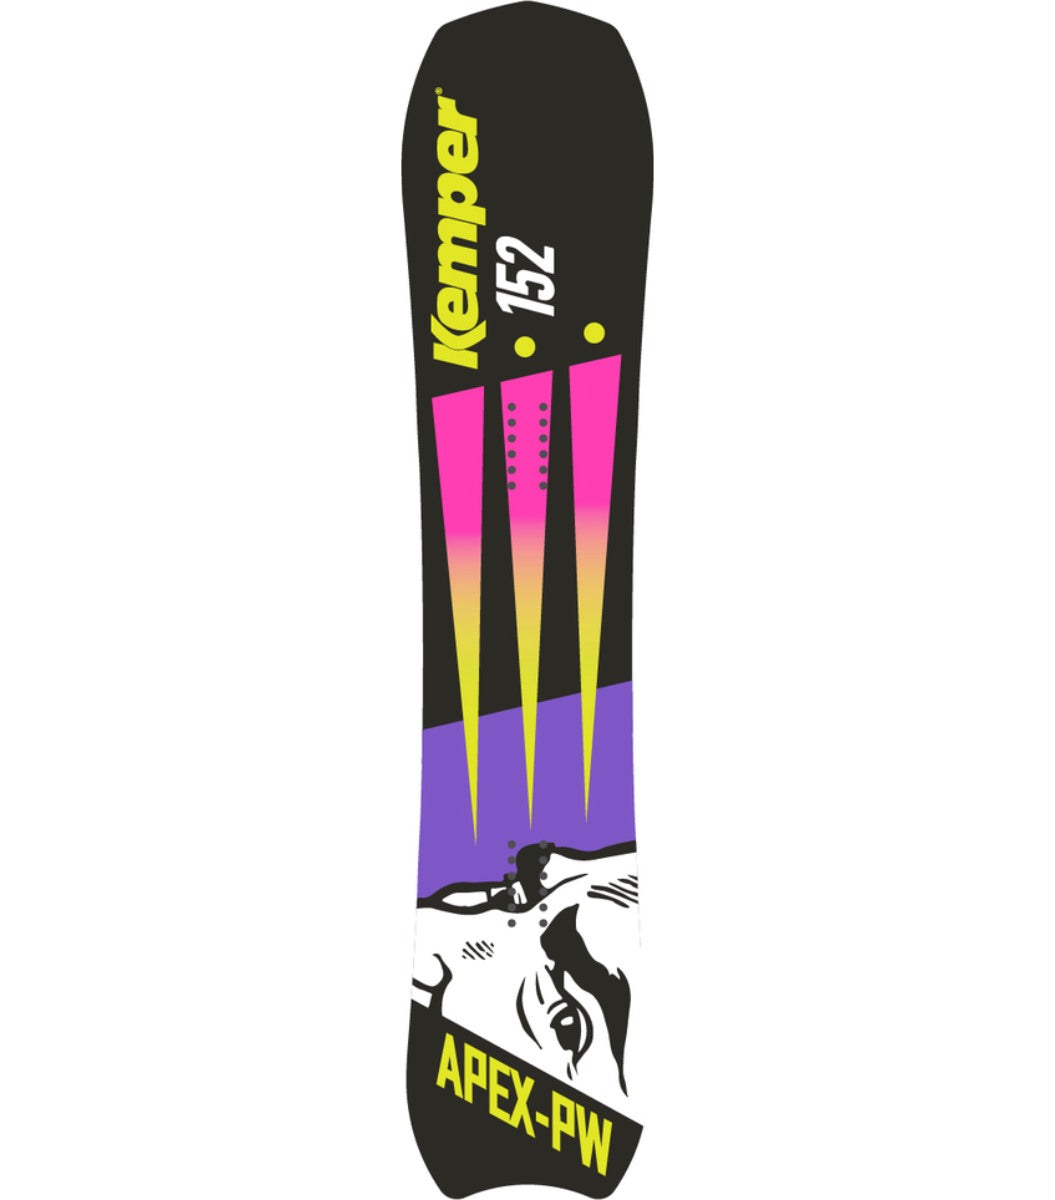 12: Kemper Apex 1990/91 Snowboard - 156 cm